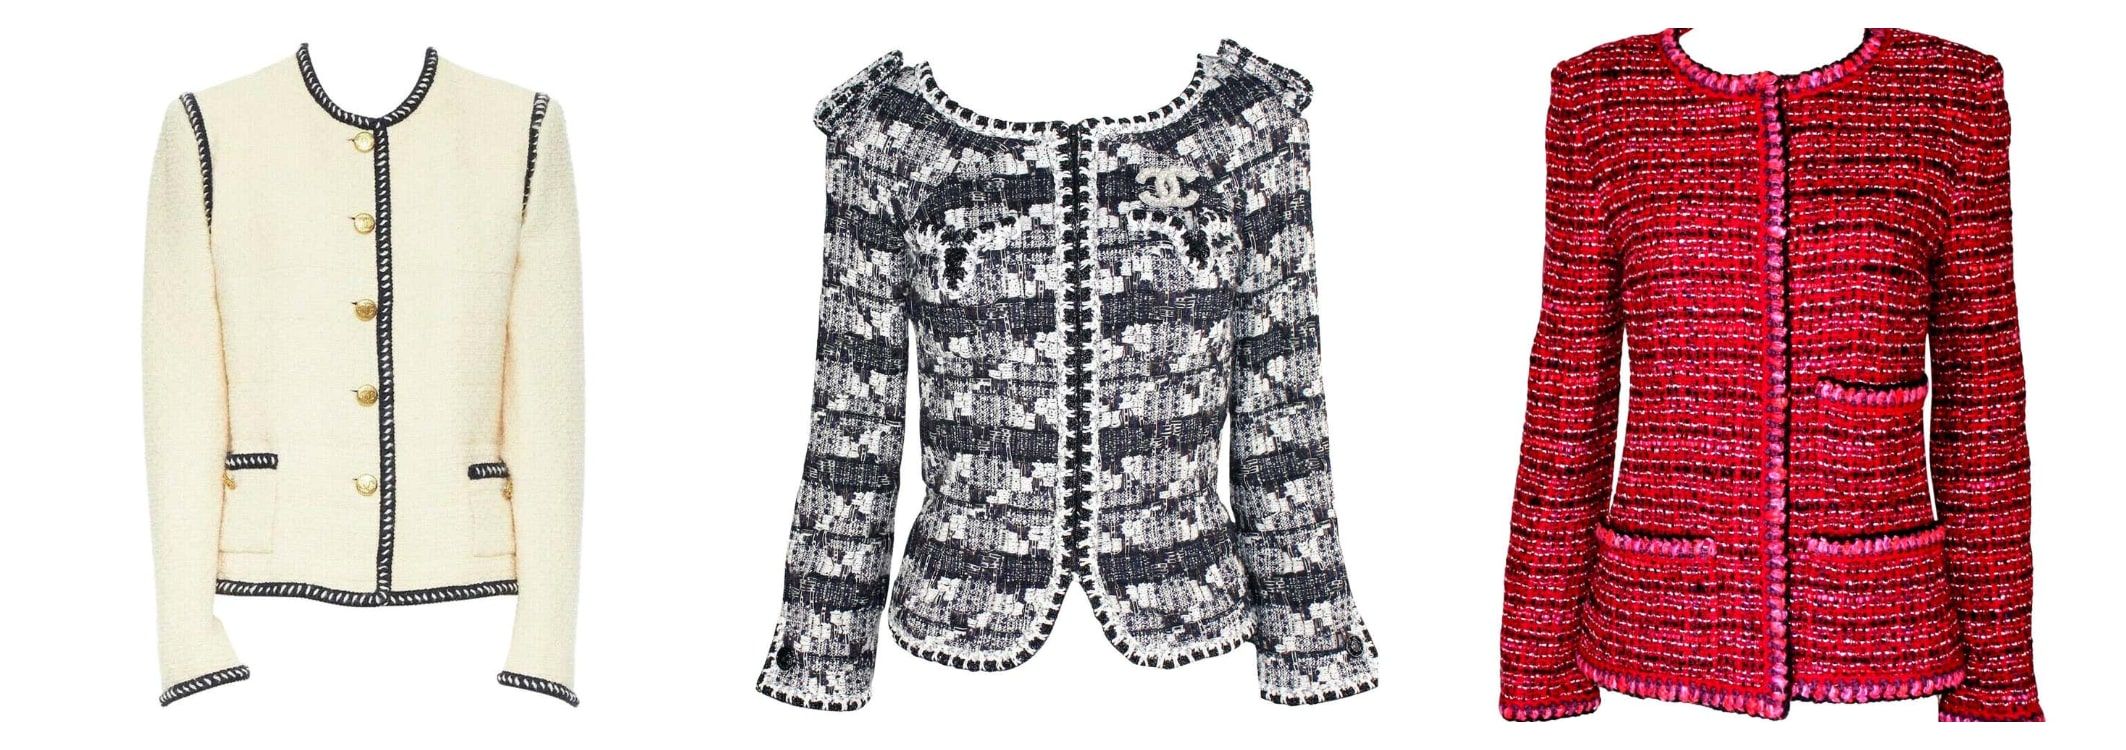 tweed jacket womens chanel style